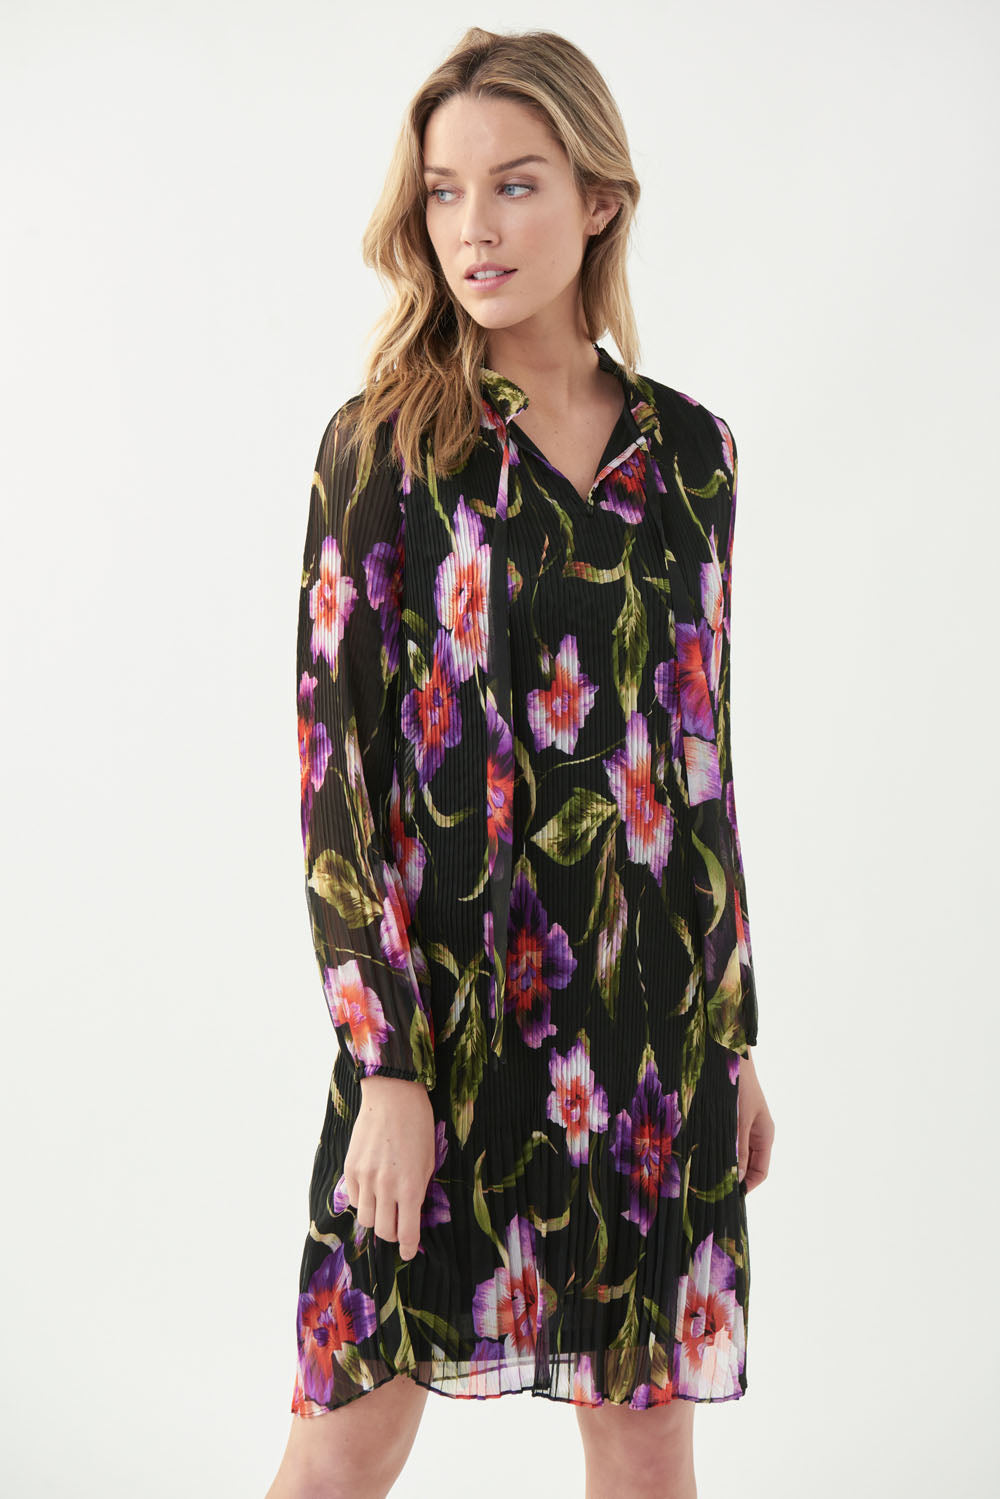 Joseph Ribkoff Black-Multi Pleated Floral Print Dress Style 221923